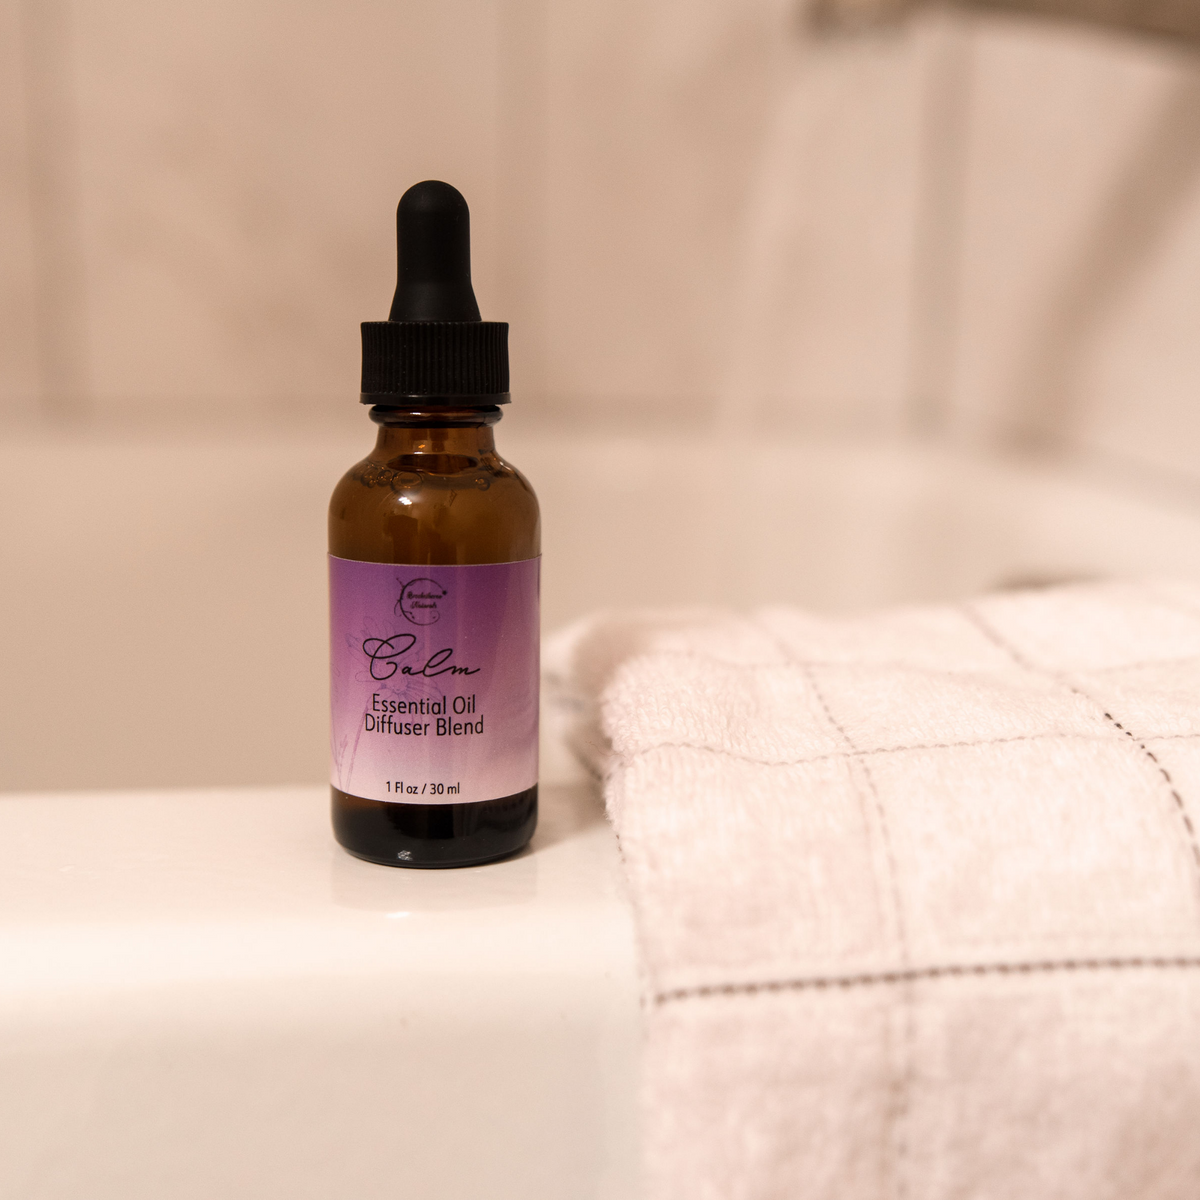 Calm essential oil diffuser blend sitting on a bath tub next to a bath towel